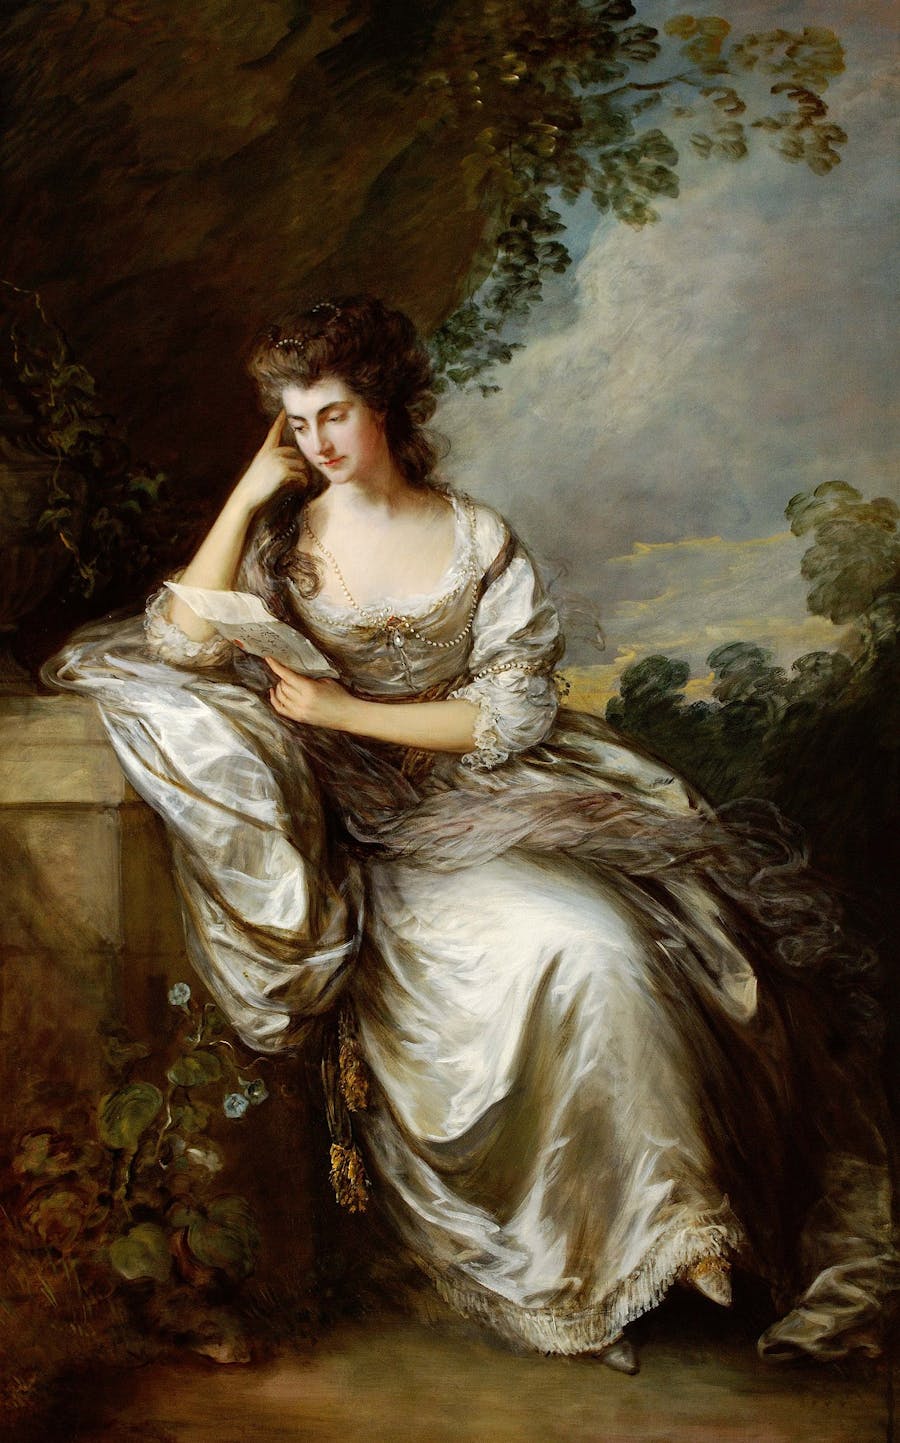 Thomas Gainsborough, Frances Browne, Mrs John Douglas (1746–1811), 1783–84. Public domain image